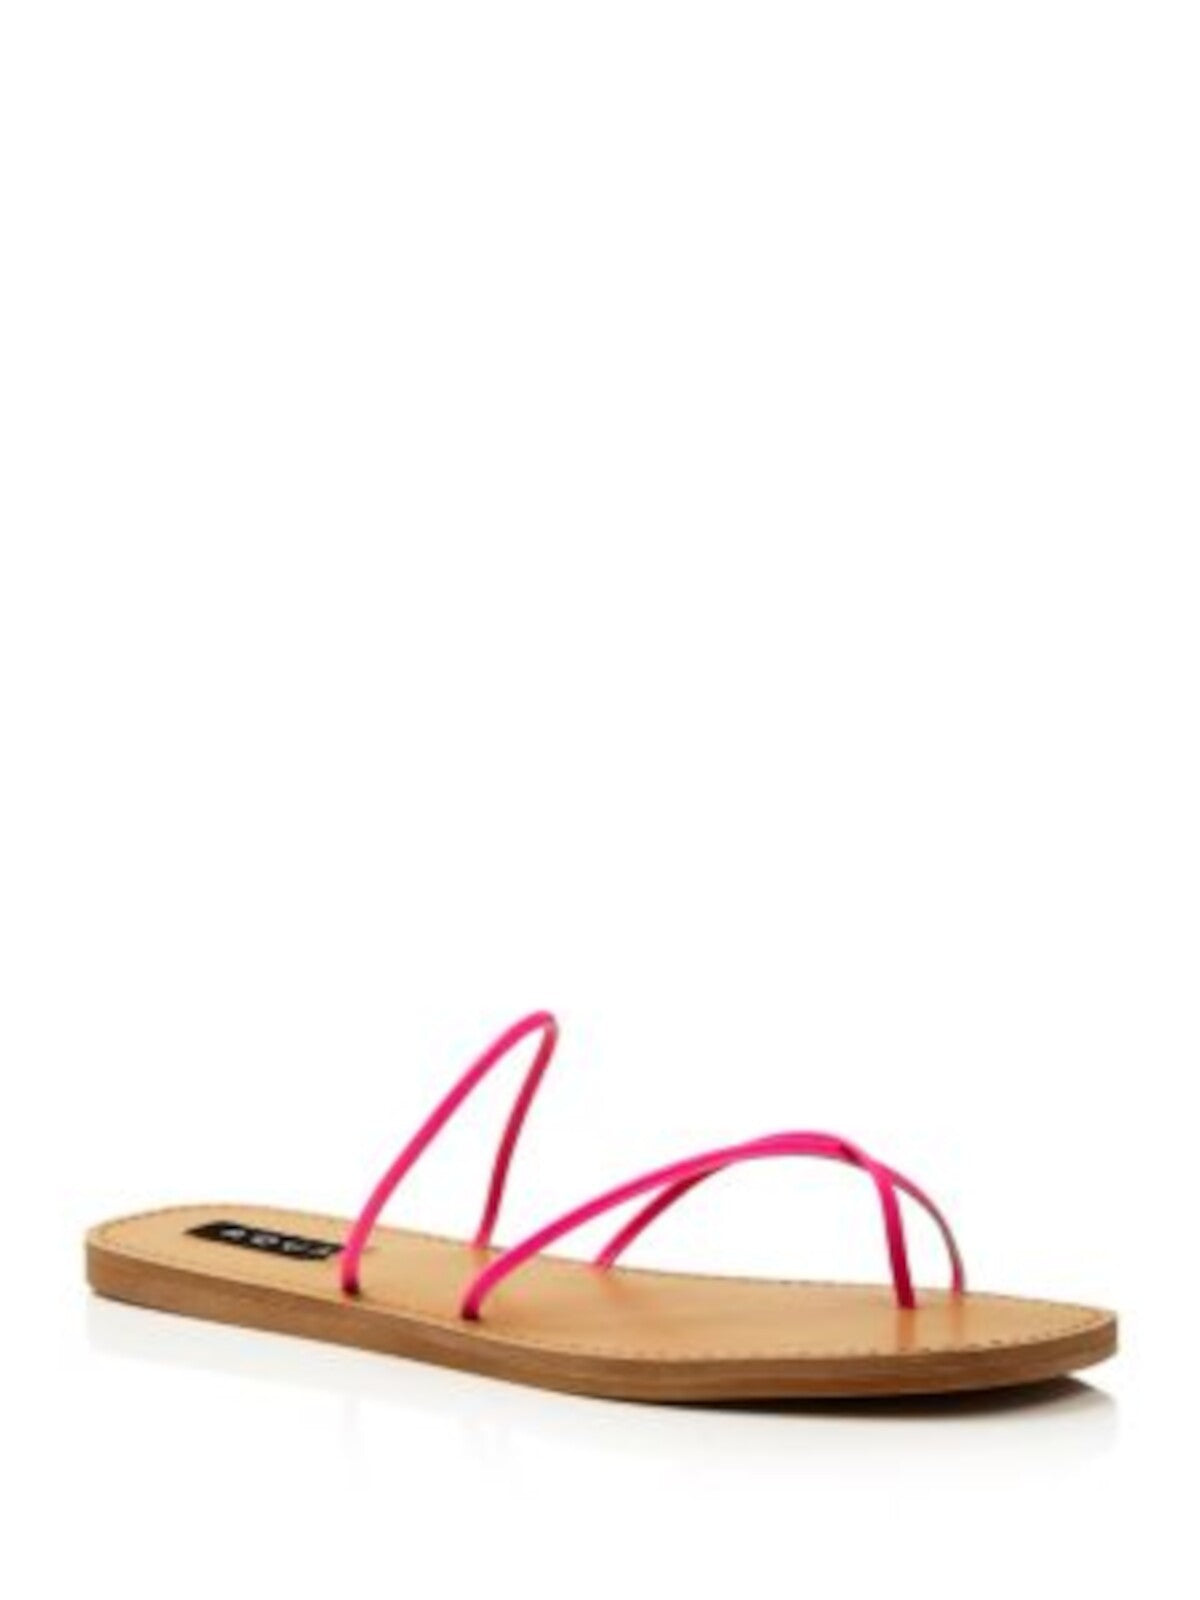 AQUA Womens Pink Toe-Loop Strappy Zeus Square Toe Slip On Leather Slide Sandals 7.5 M